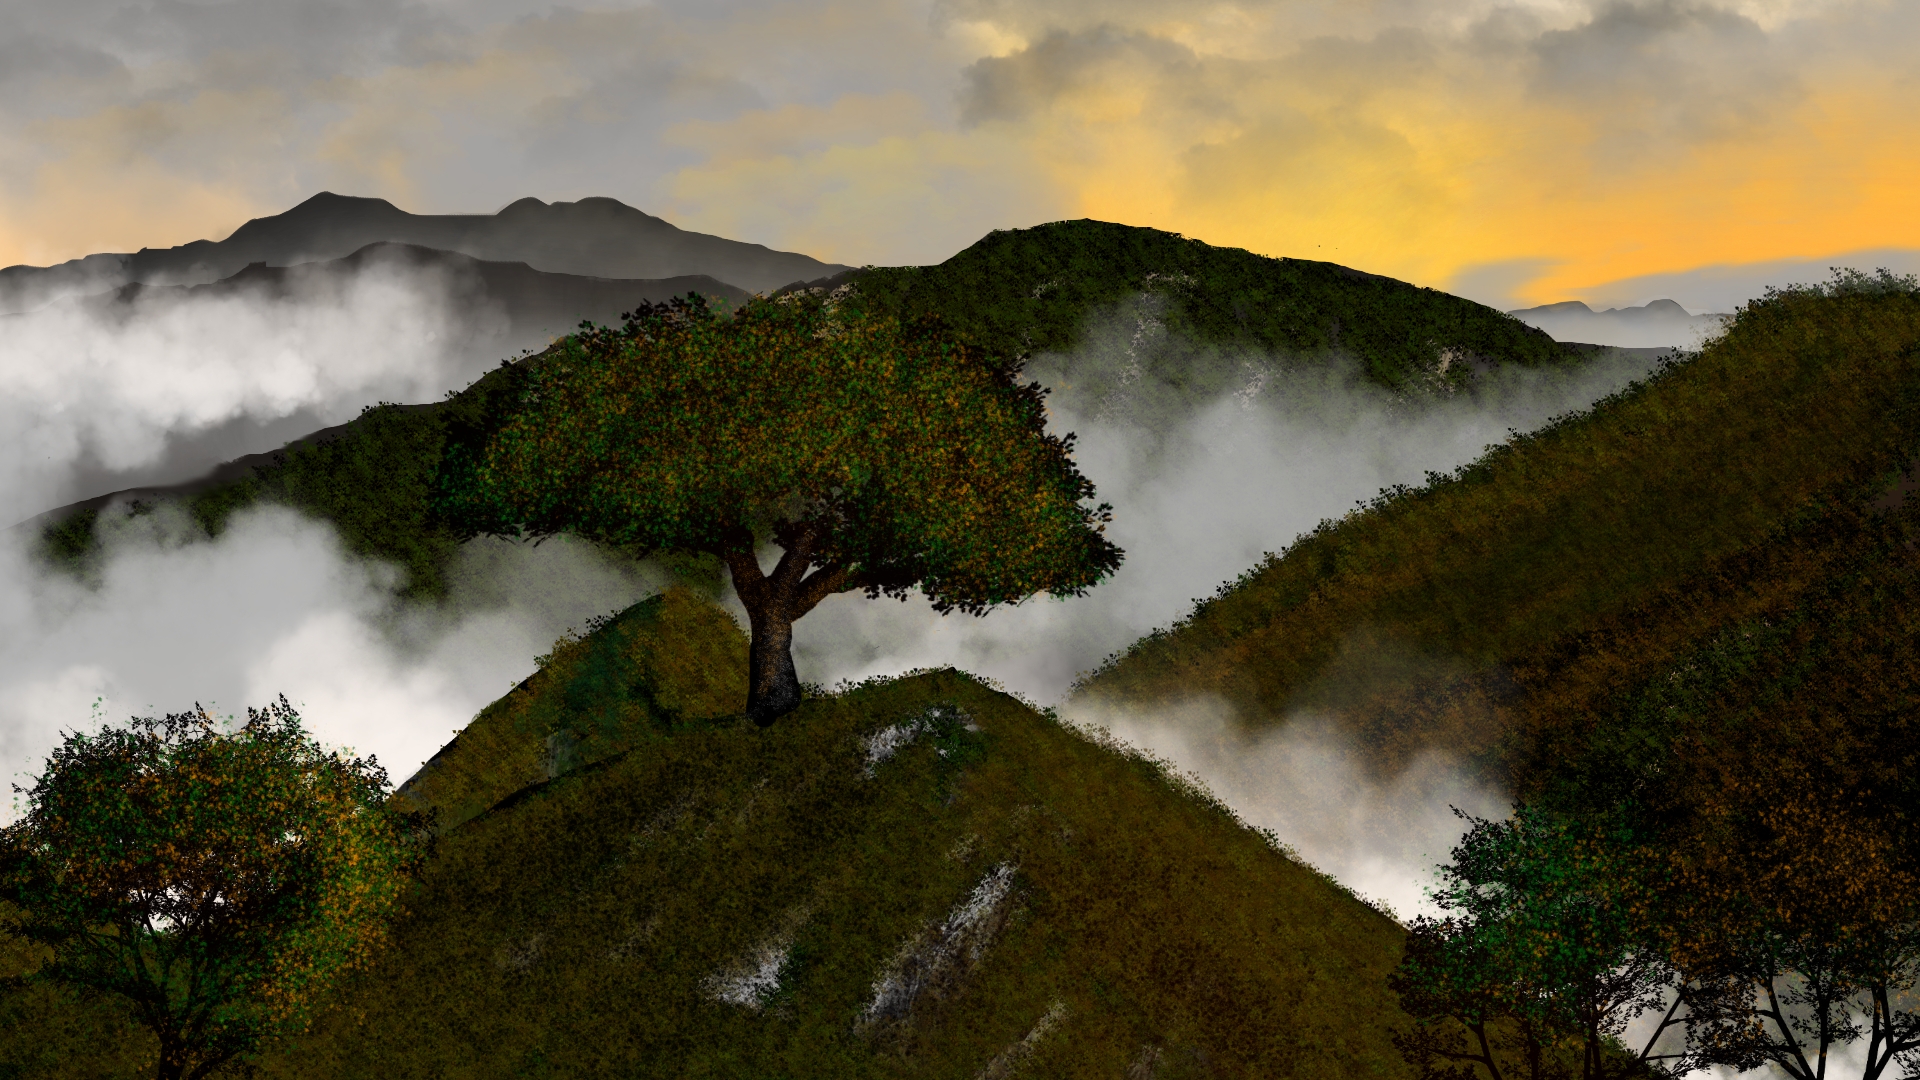 Digital Painting Digital Art Nature Landscape Fall Mist Artwork Trees Mountains 1920x1080